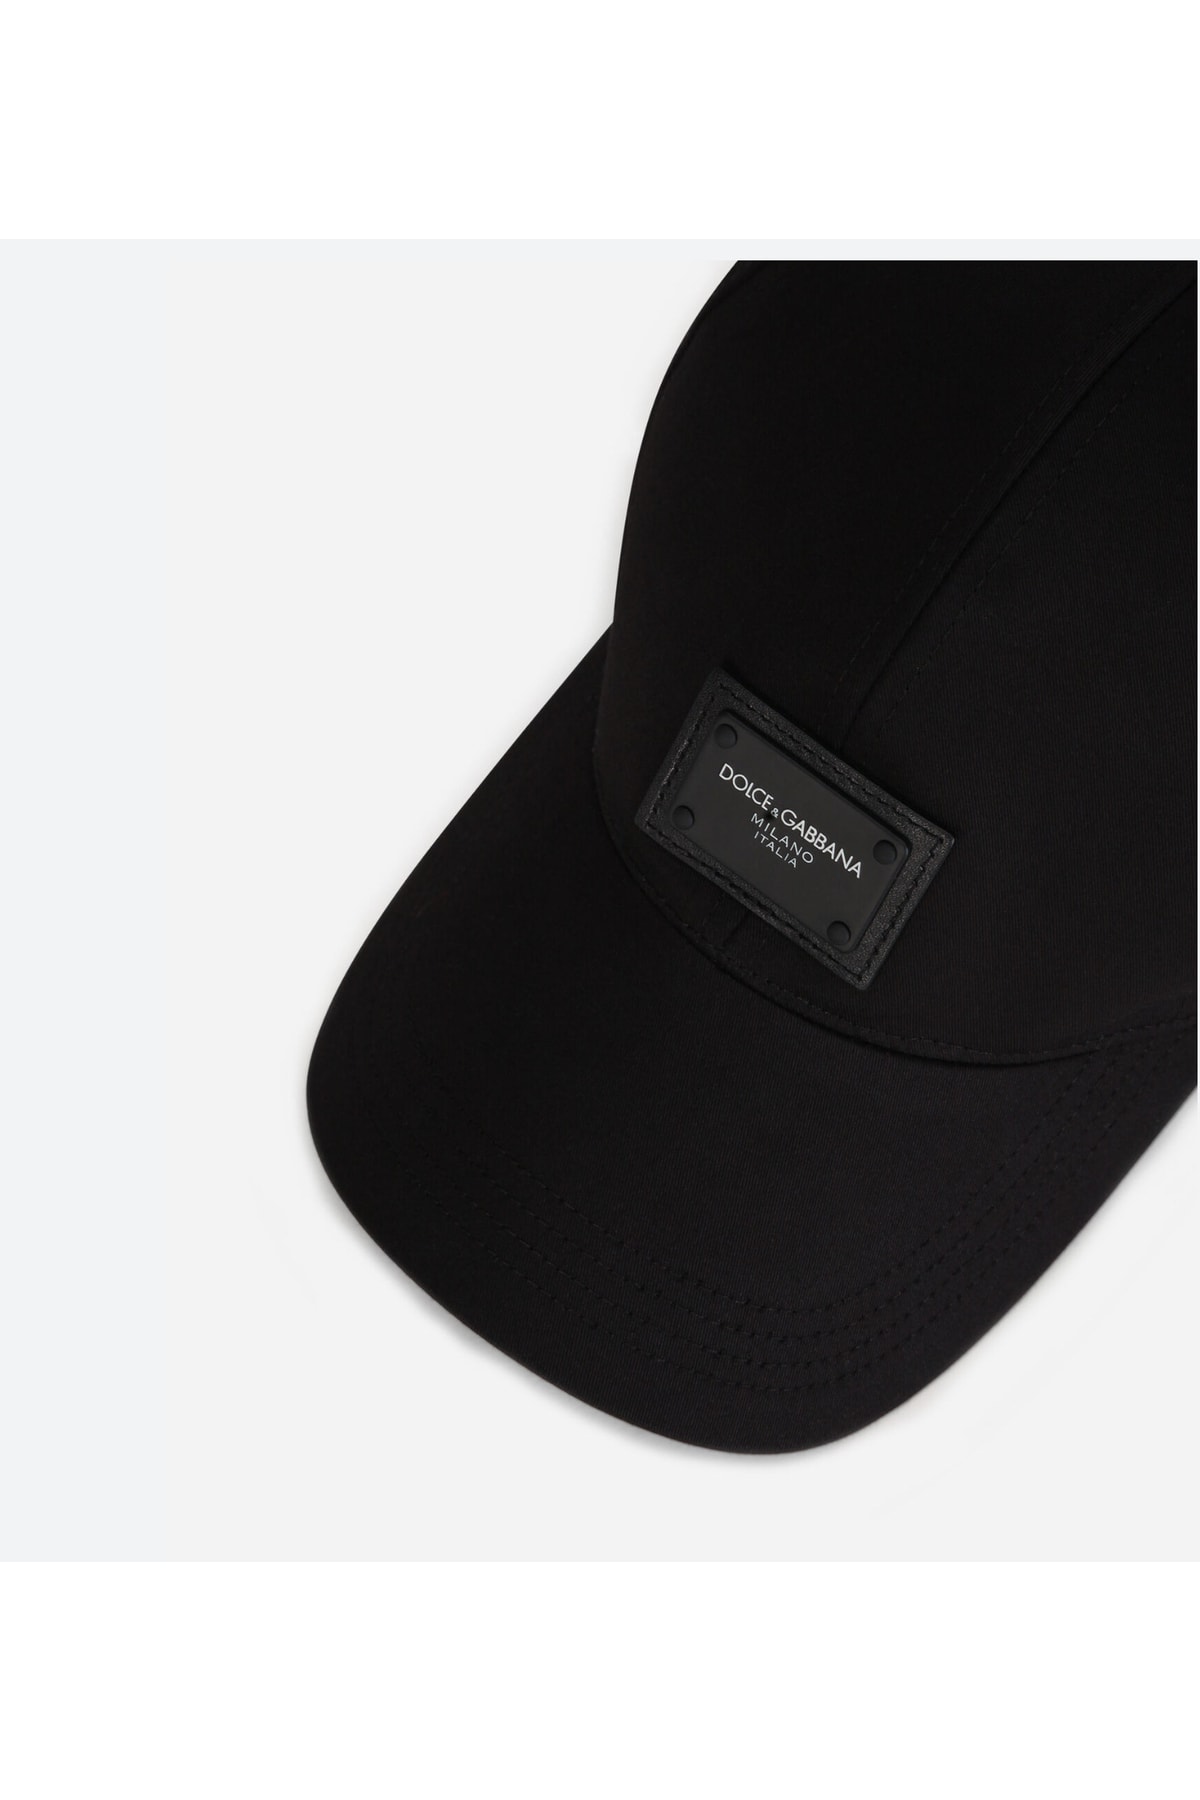 Superreal Siyah Şapka FU5893